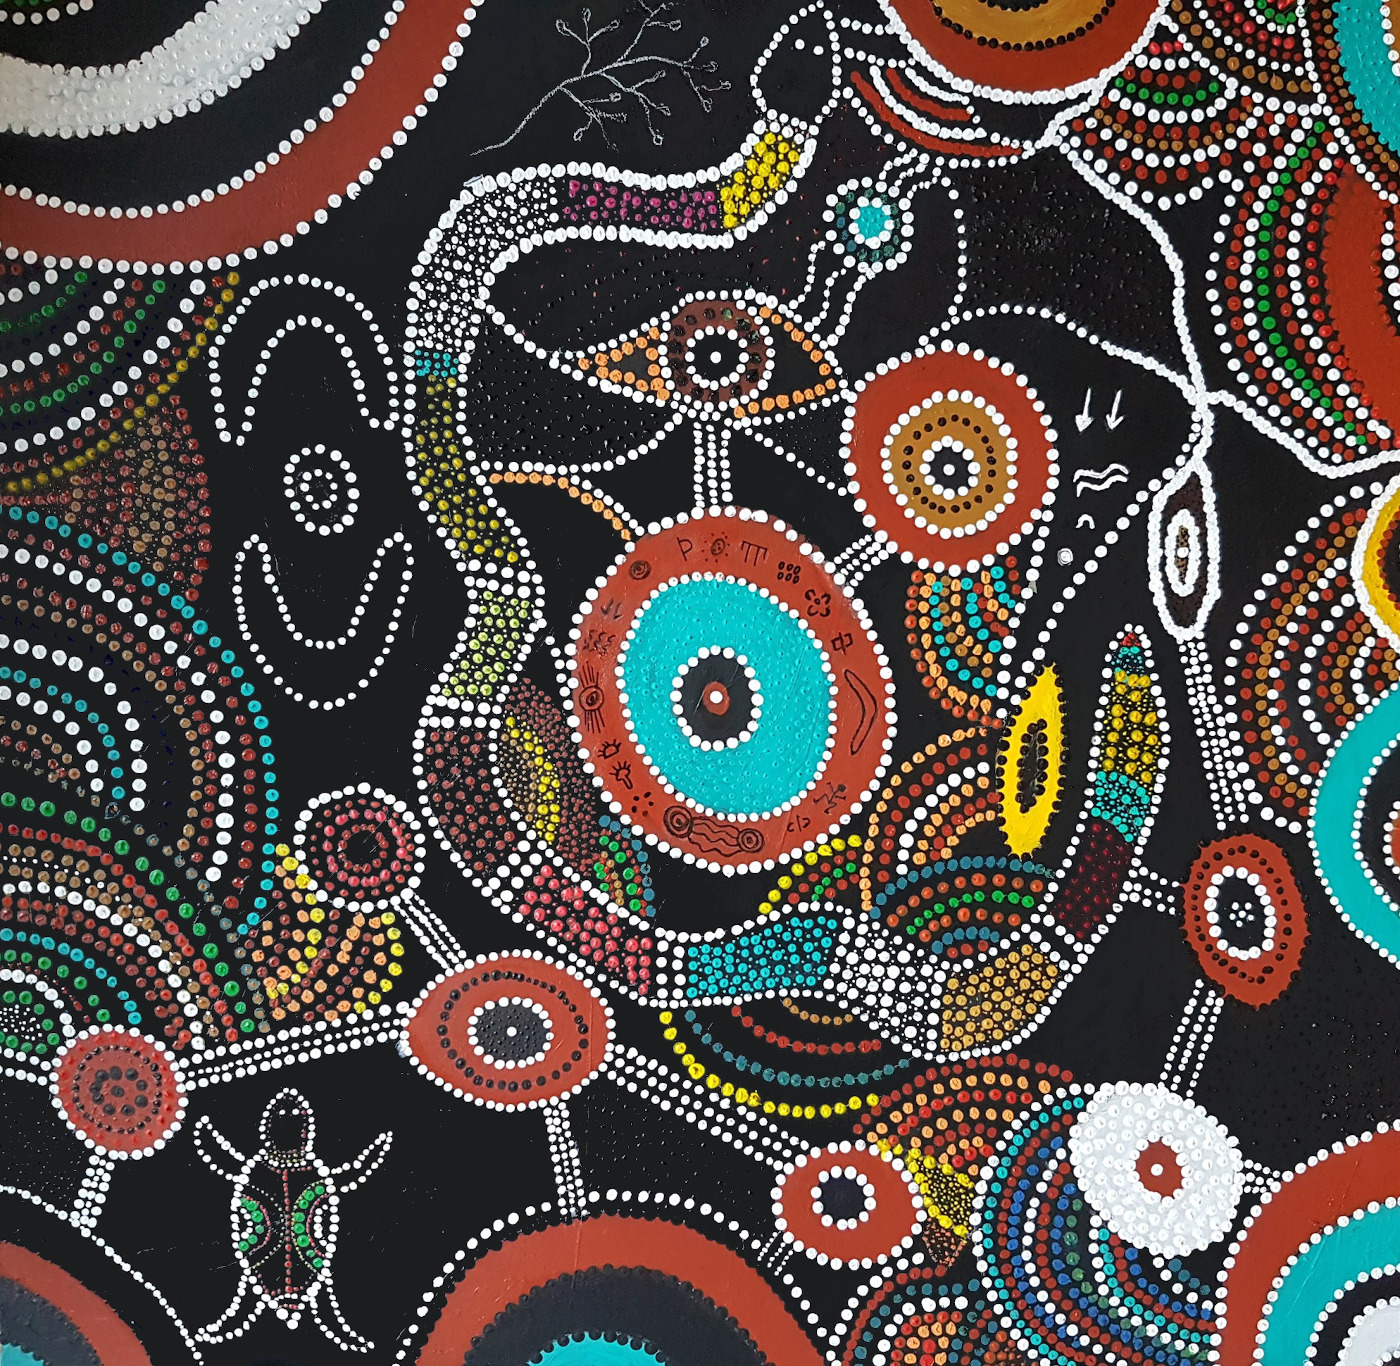 sylvie-di-palma-mecenavie-art-shopping-carrousel-louvre-2021-art-aborigene